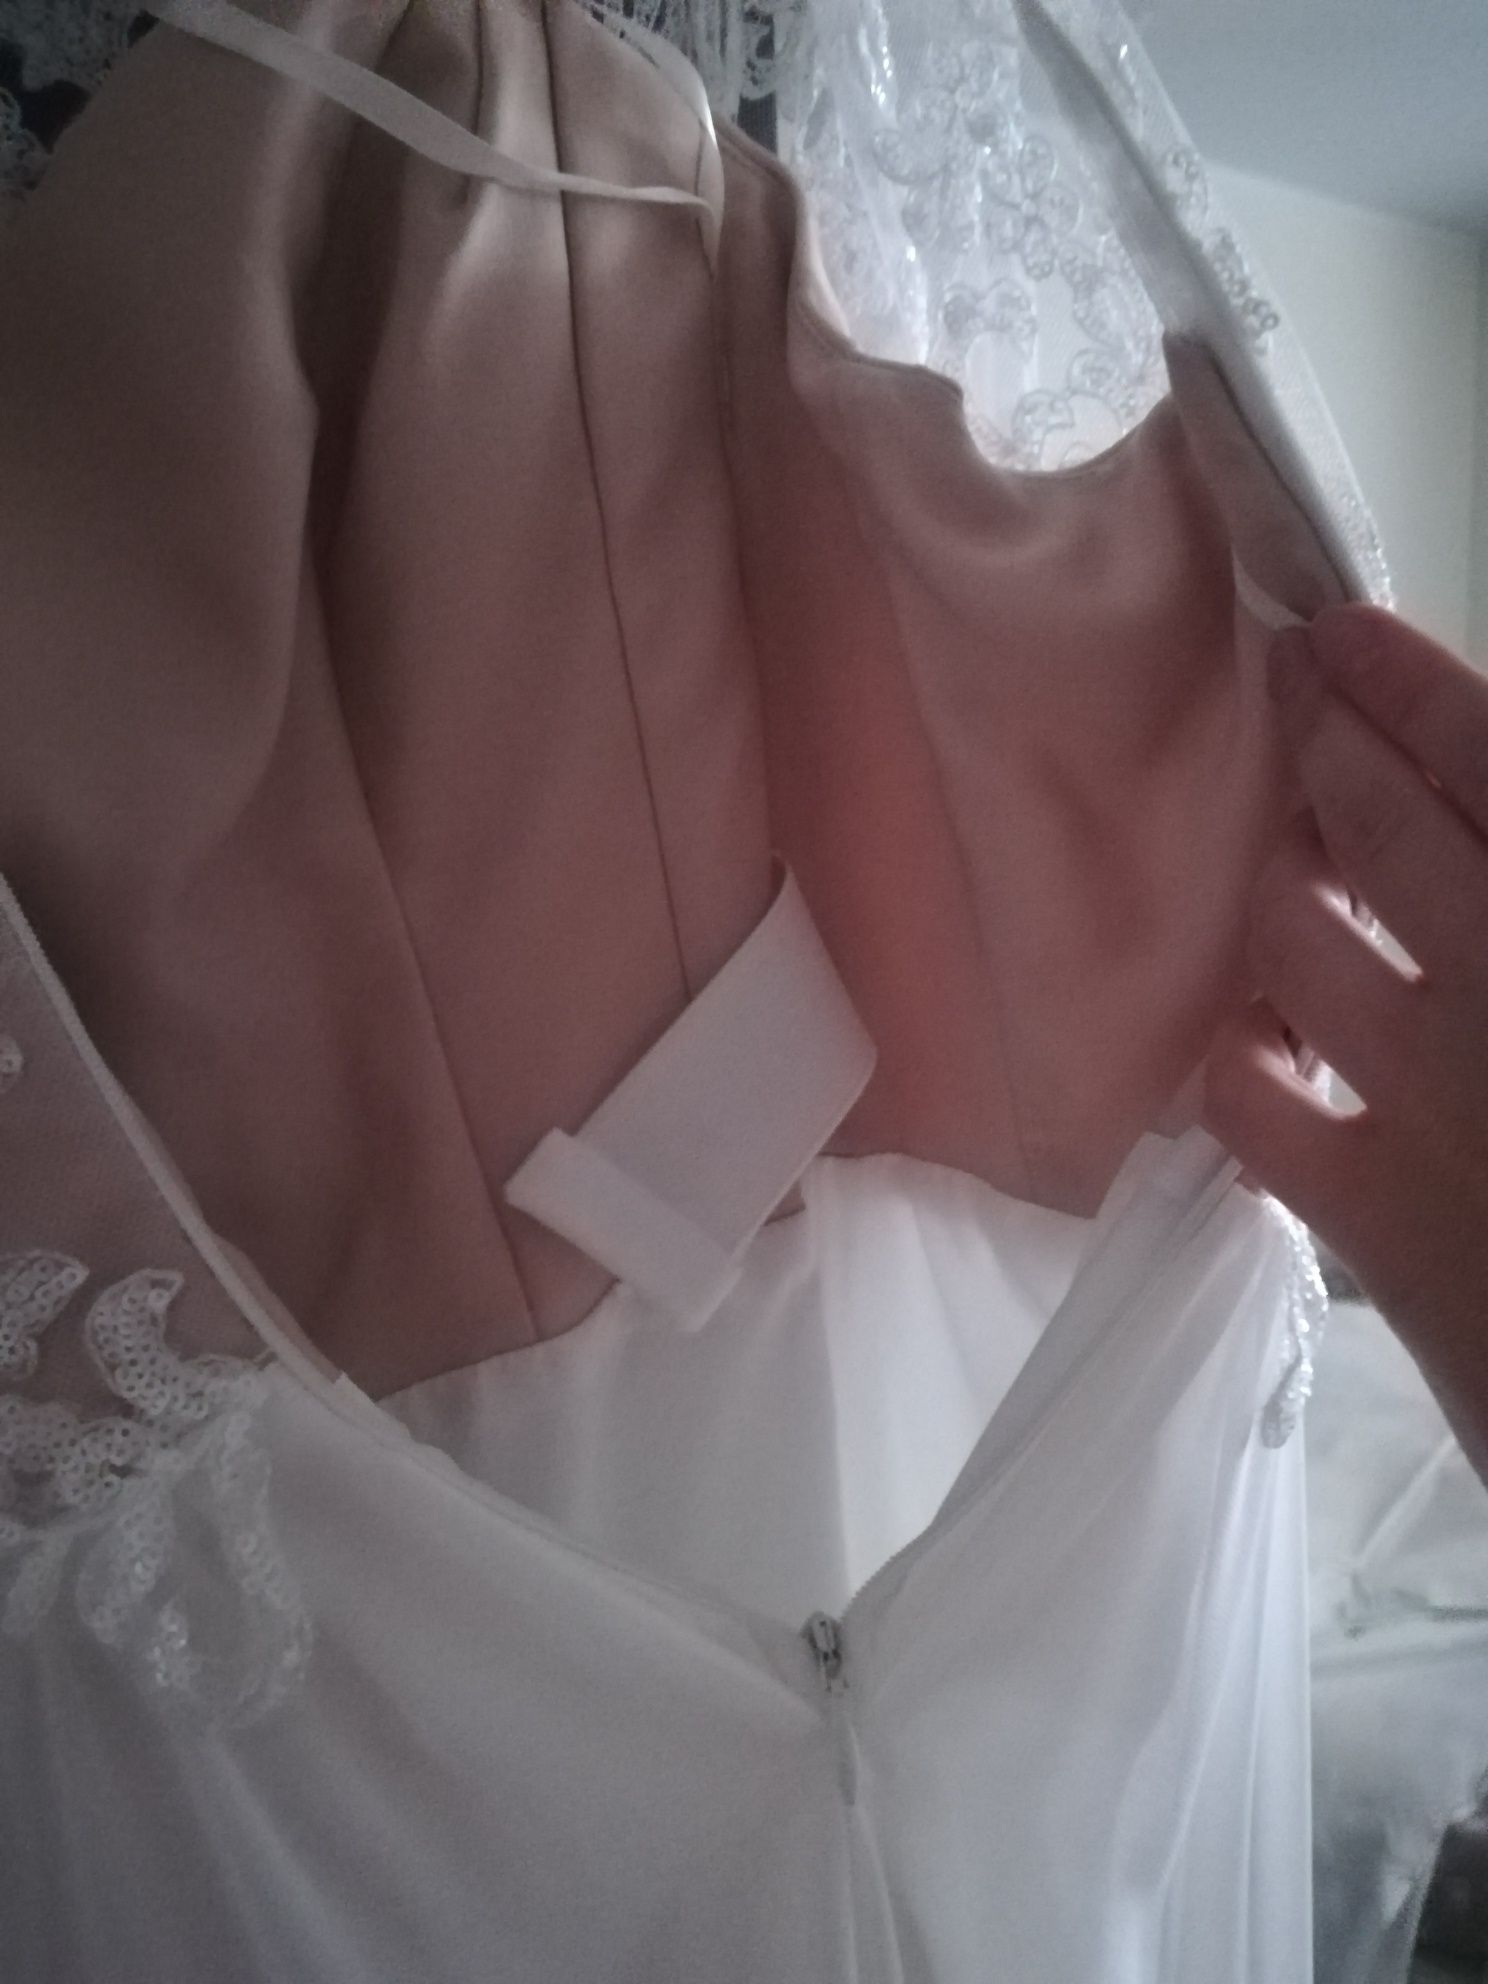 Suknia ślubna roz 36